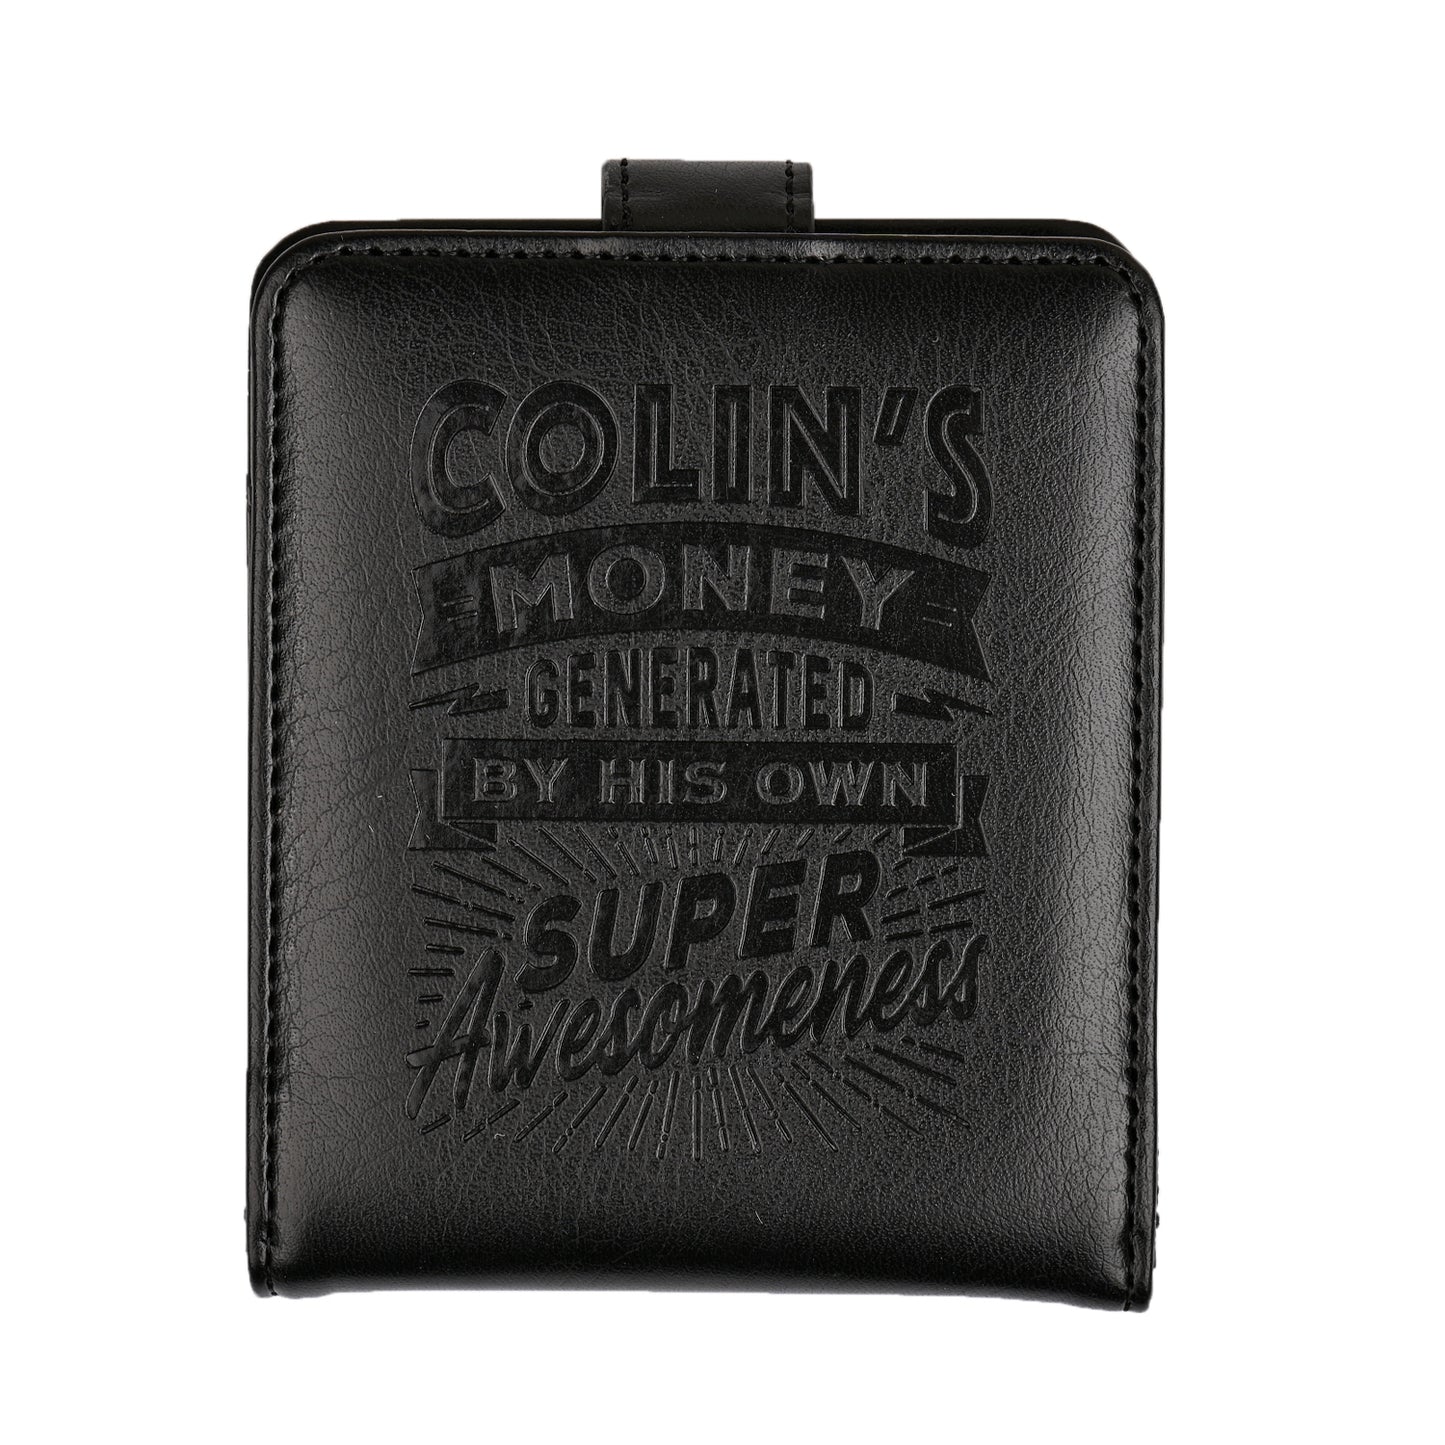 History & Heraldry Personalised RFID Wallet - Colin